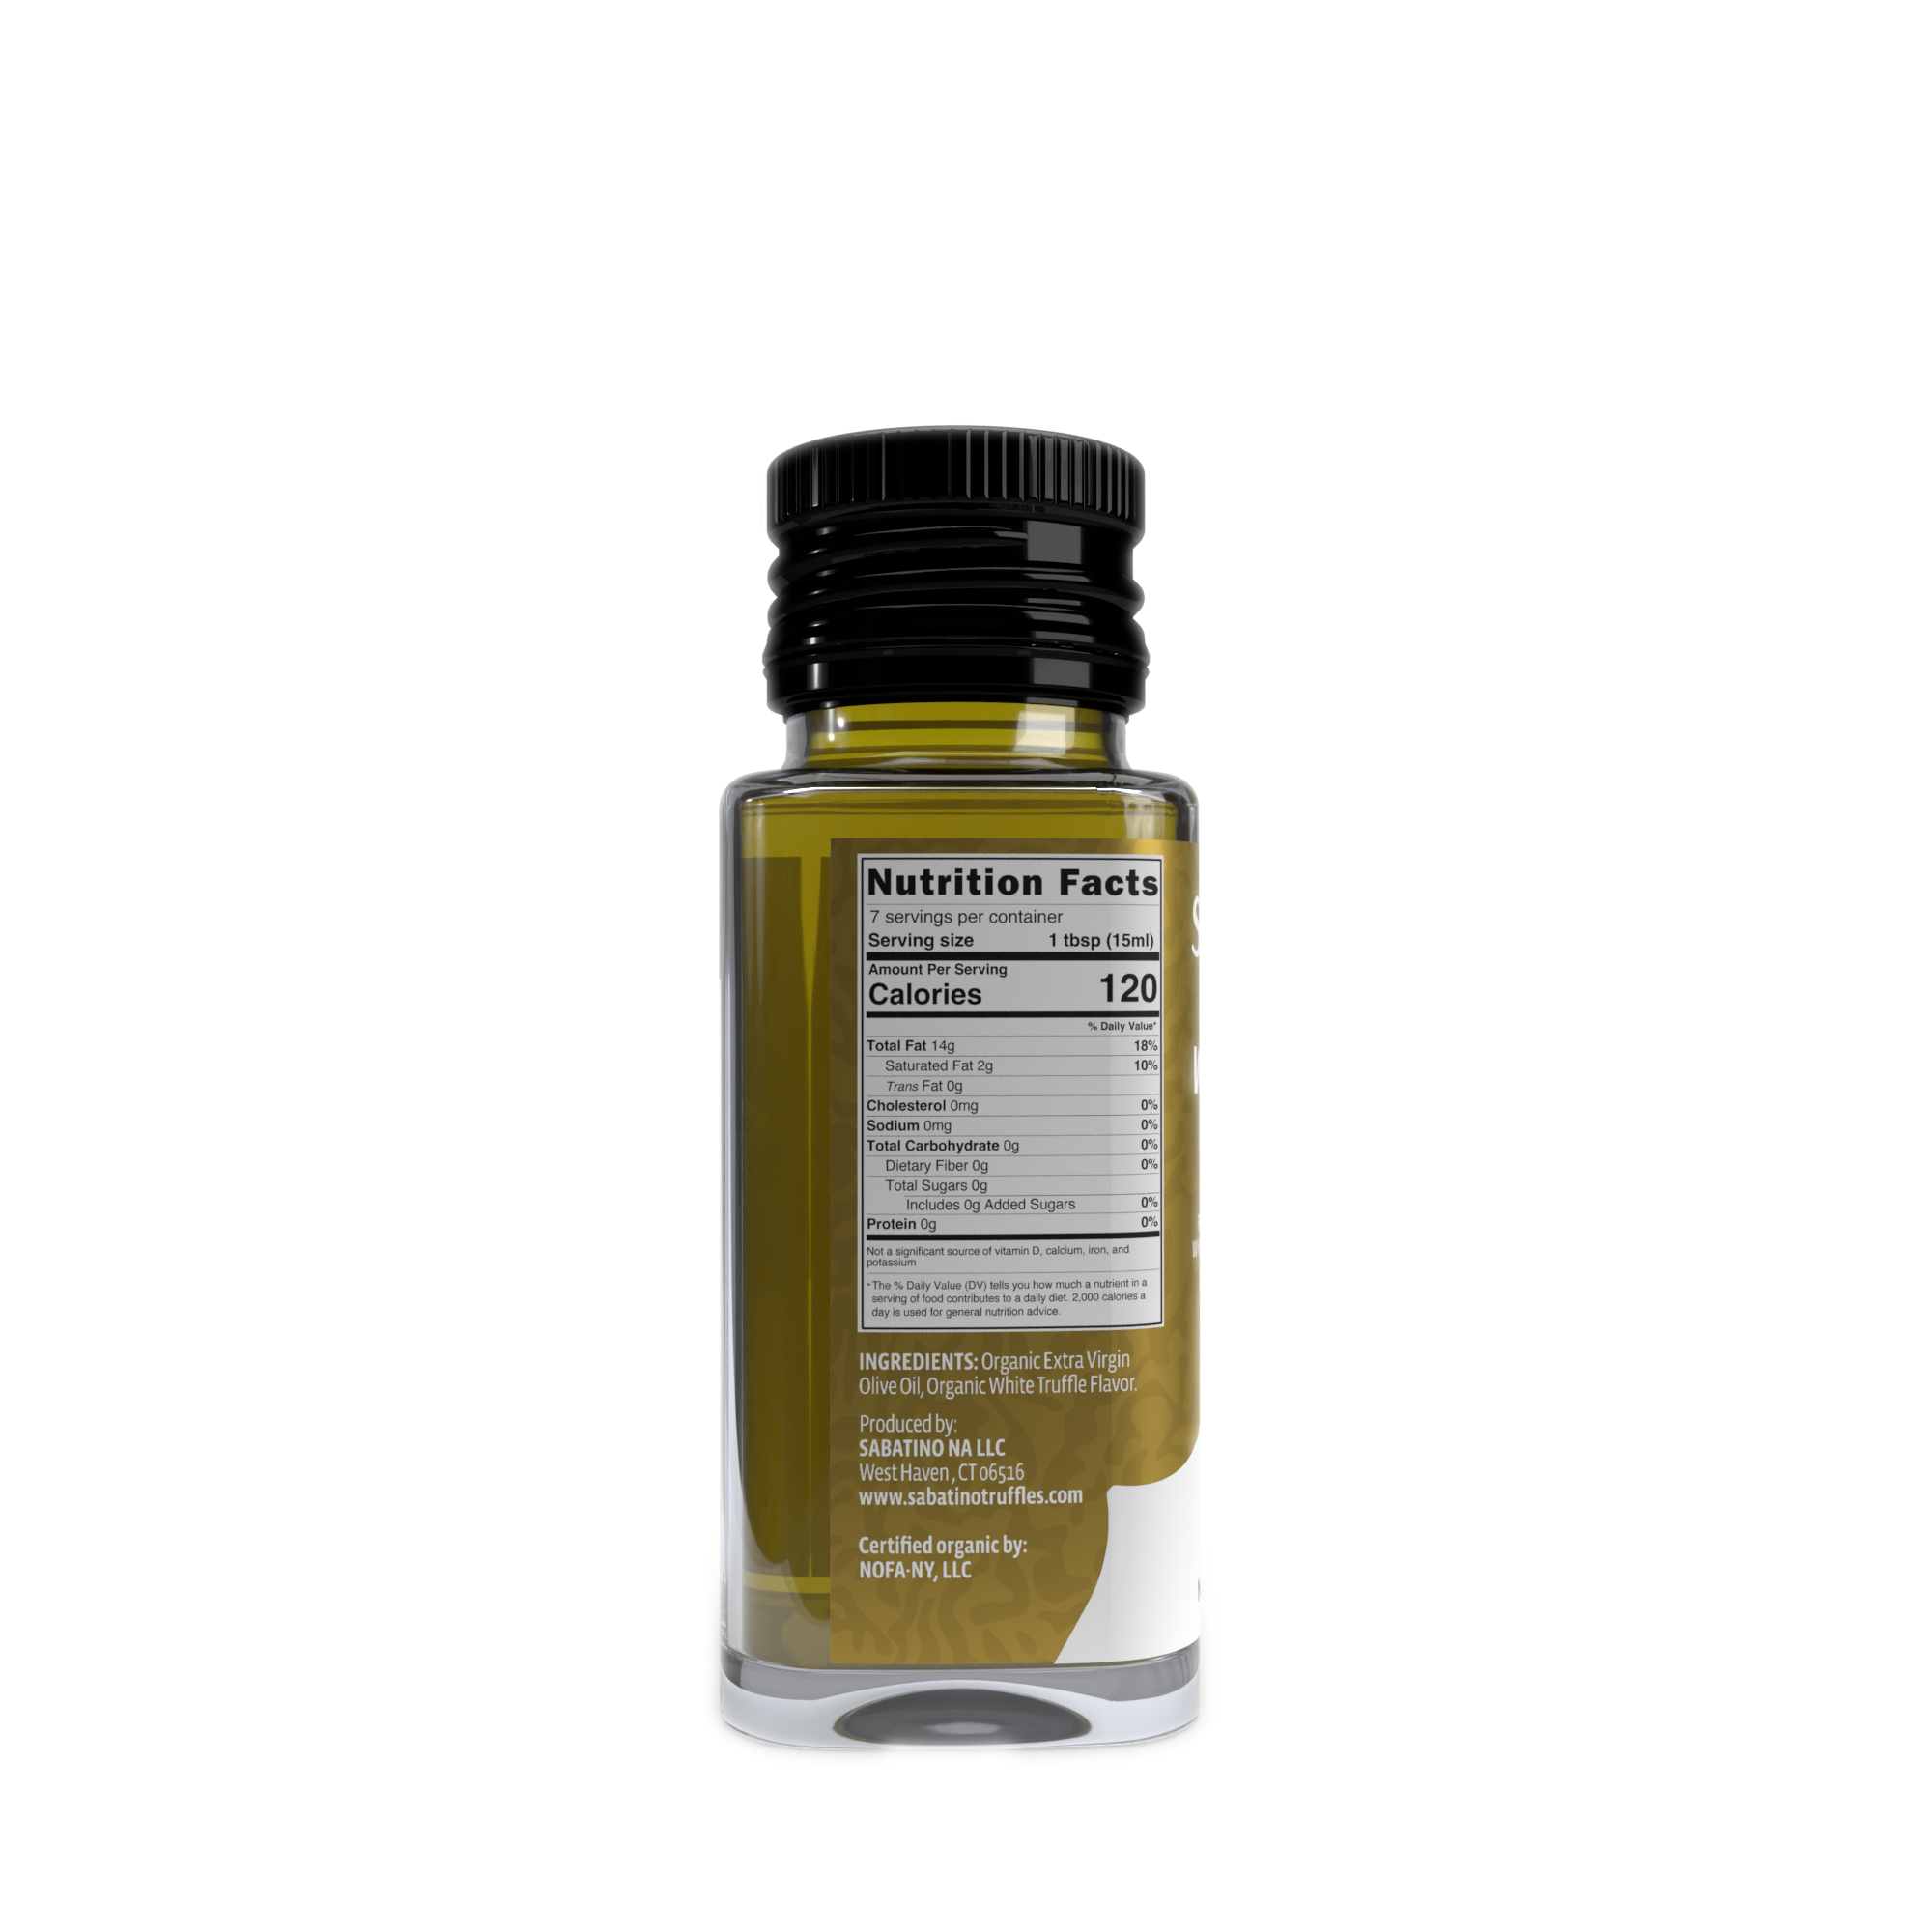 USDA Organic White Truffle Oil - 3.4 fl oz side image